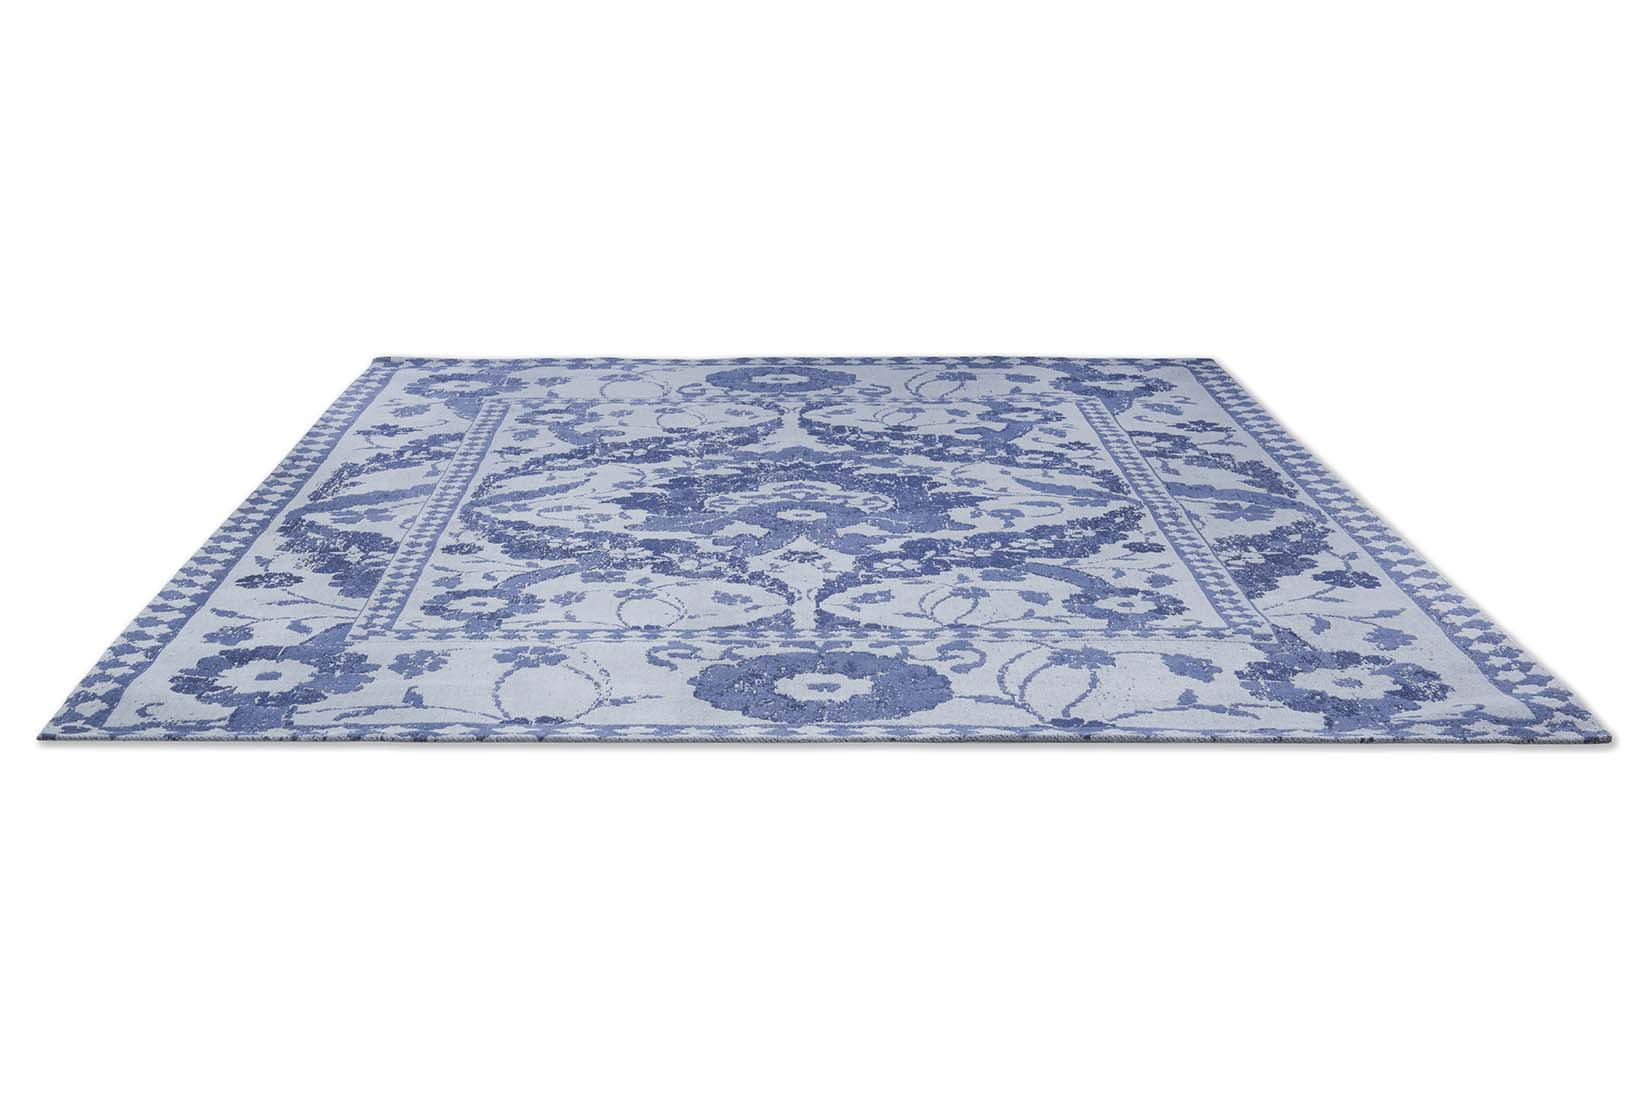 Vintage floral style cotton blue rug
